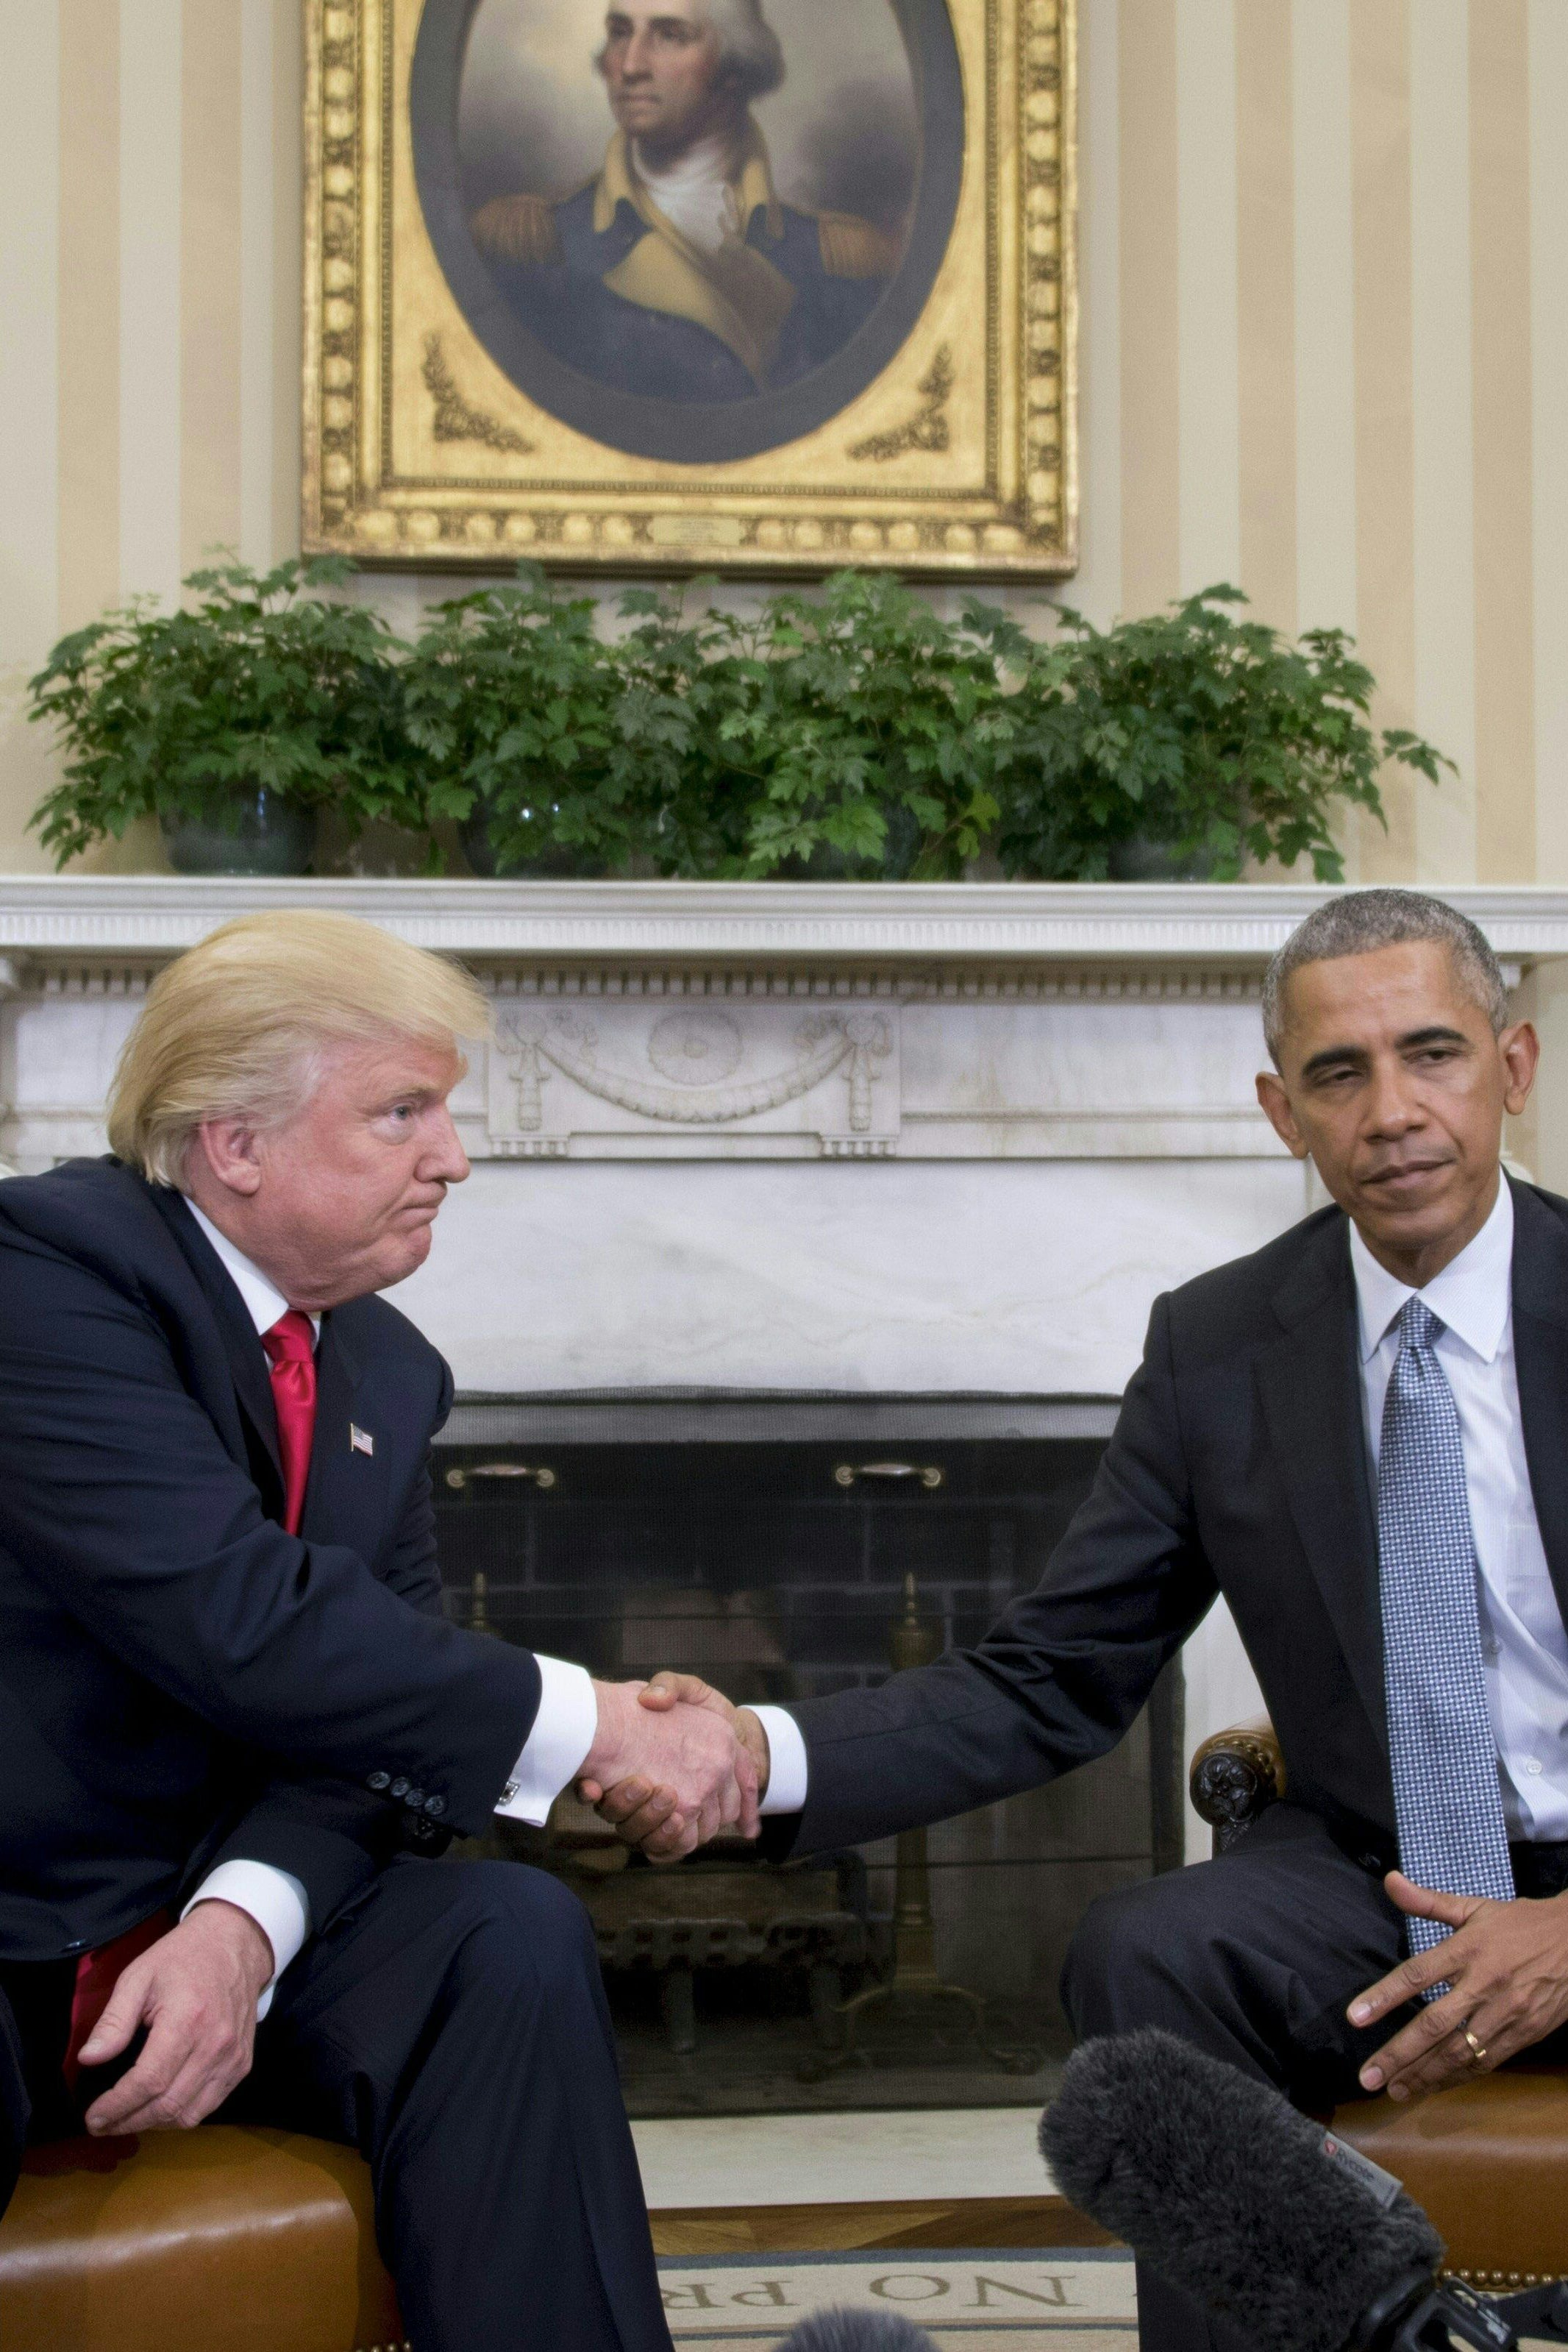 President Trump Thinks Obama 'Likes' Him
